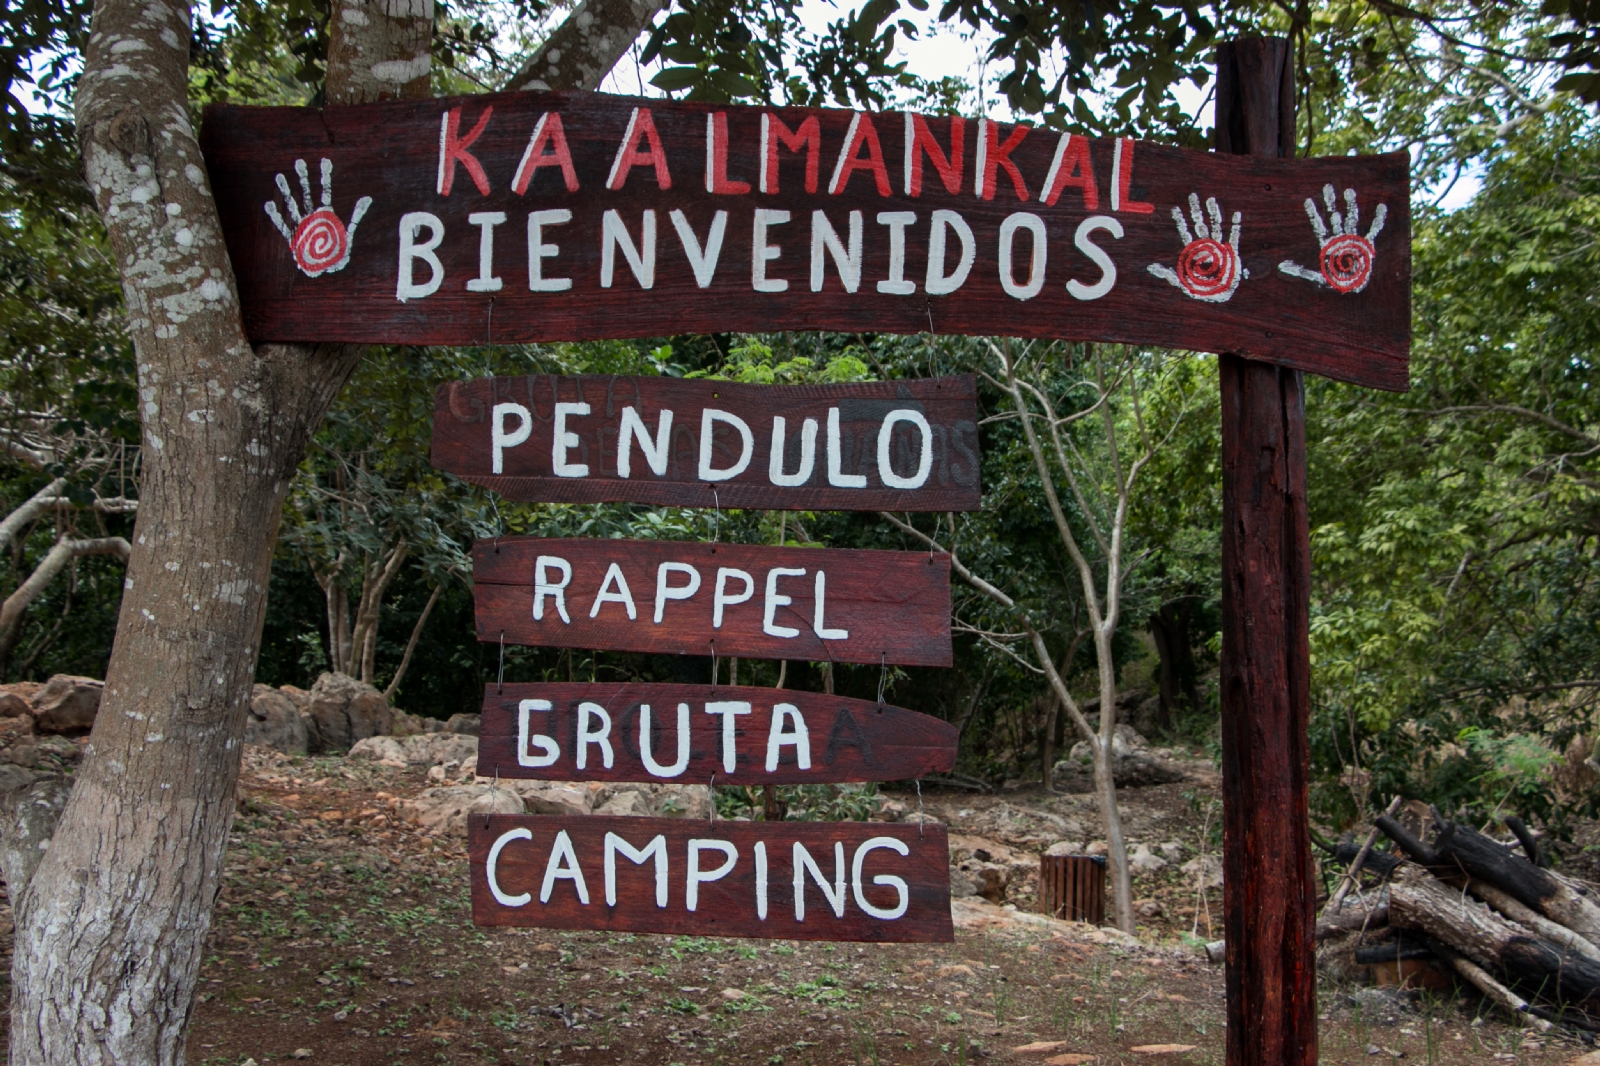 Parque ecoturístico “Kaal Mankal” en Tekax, Yucatán, busca atraer a amantes de la naturaleza